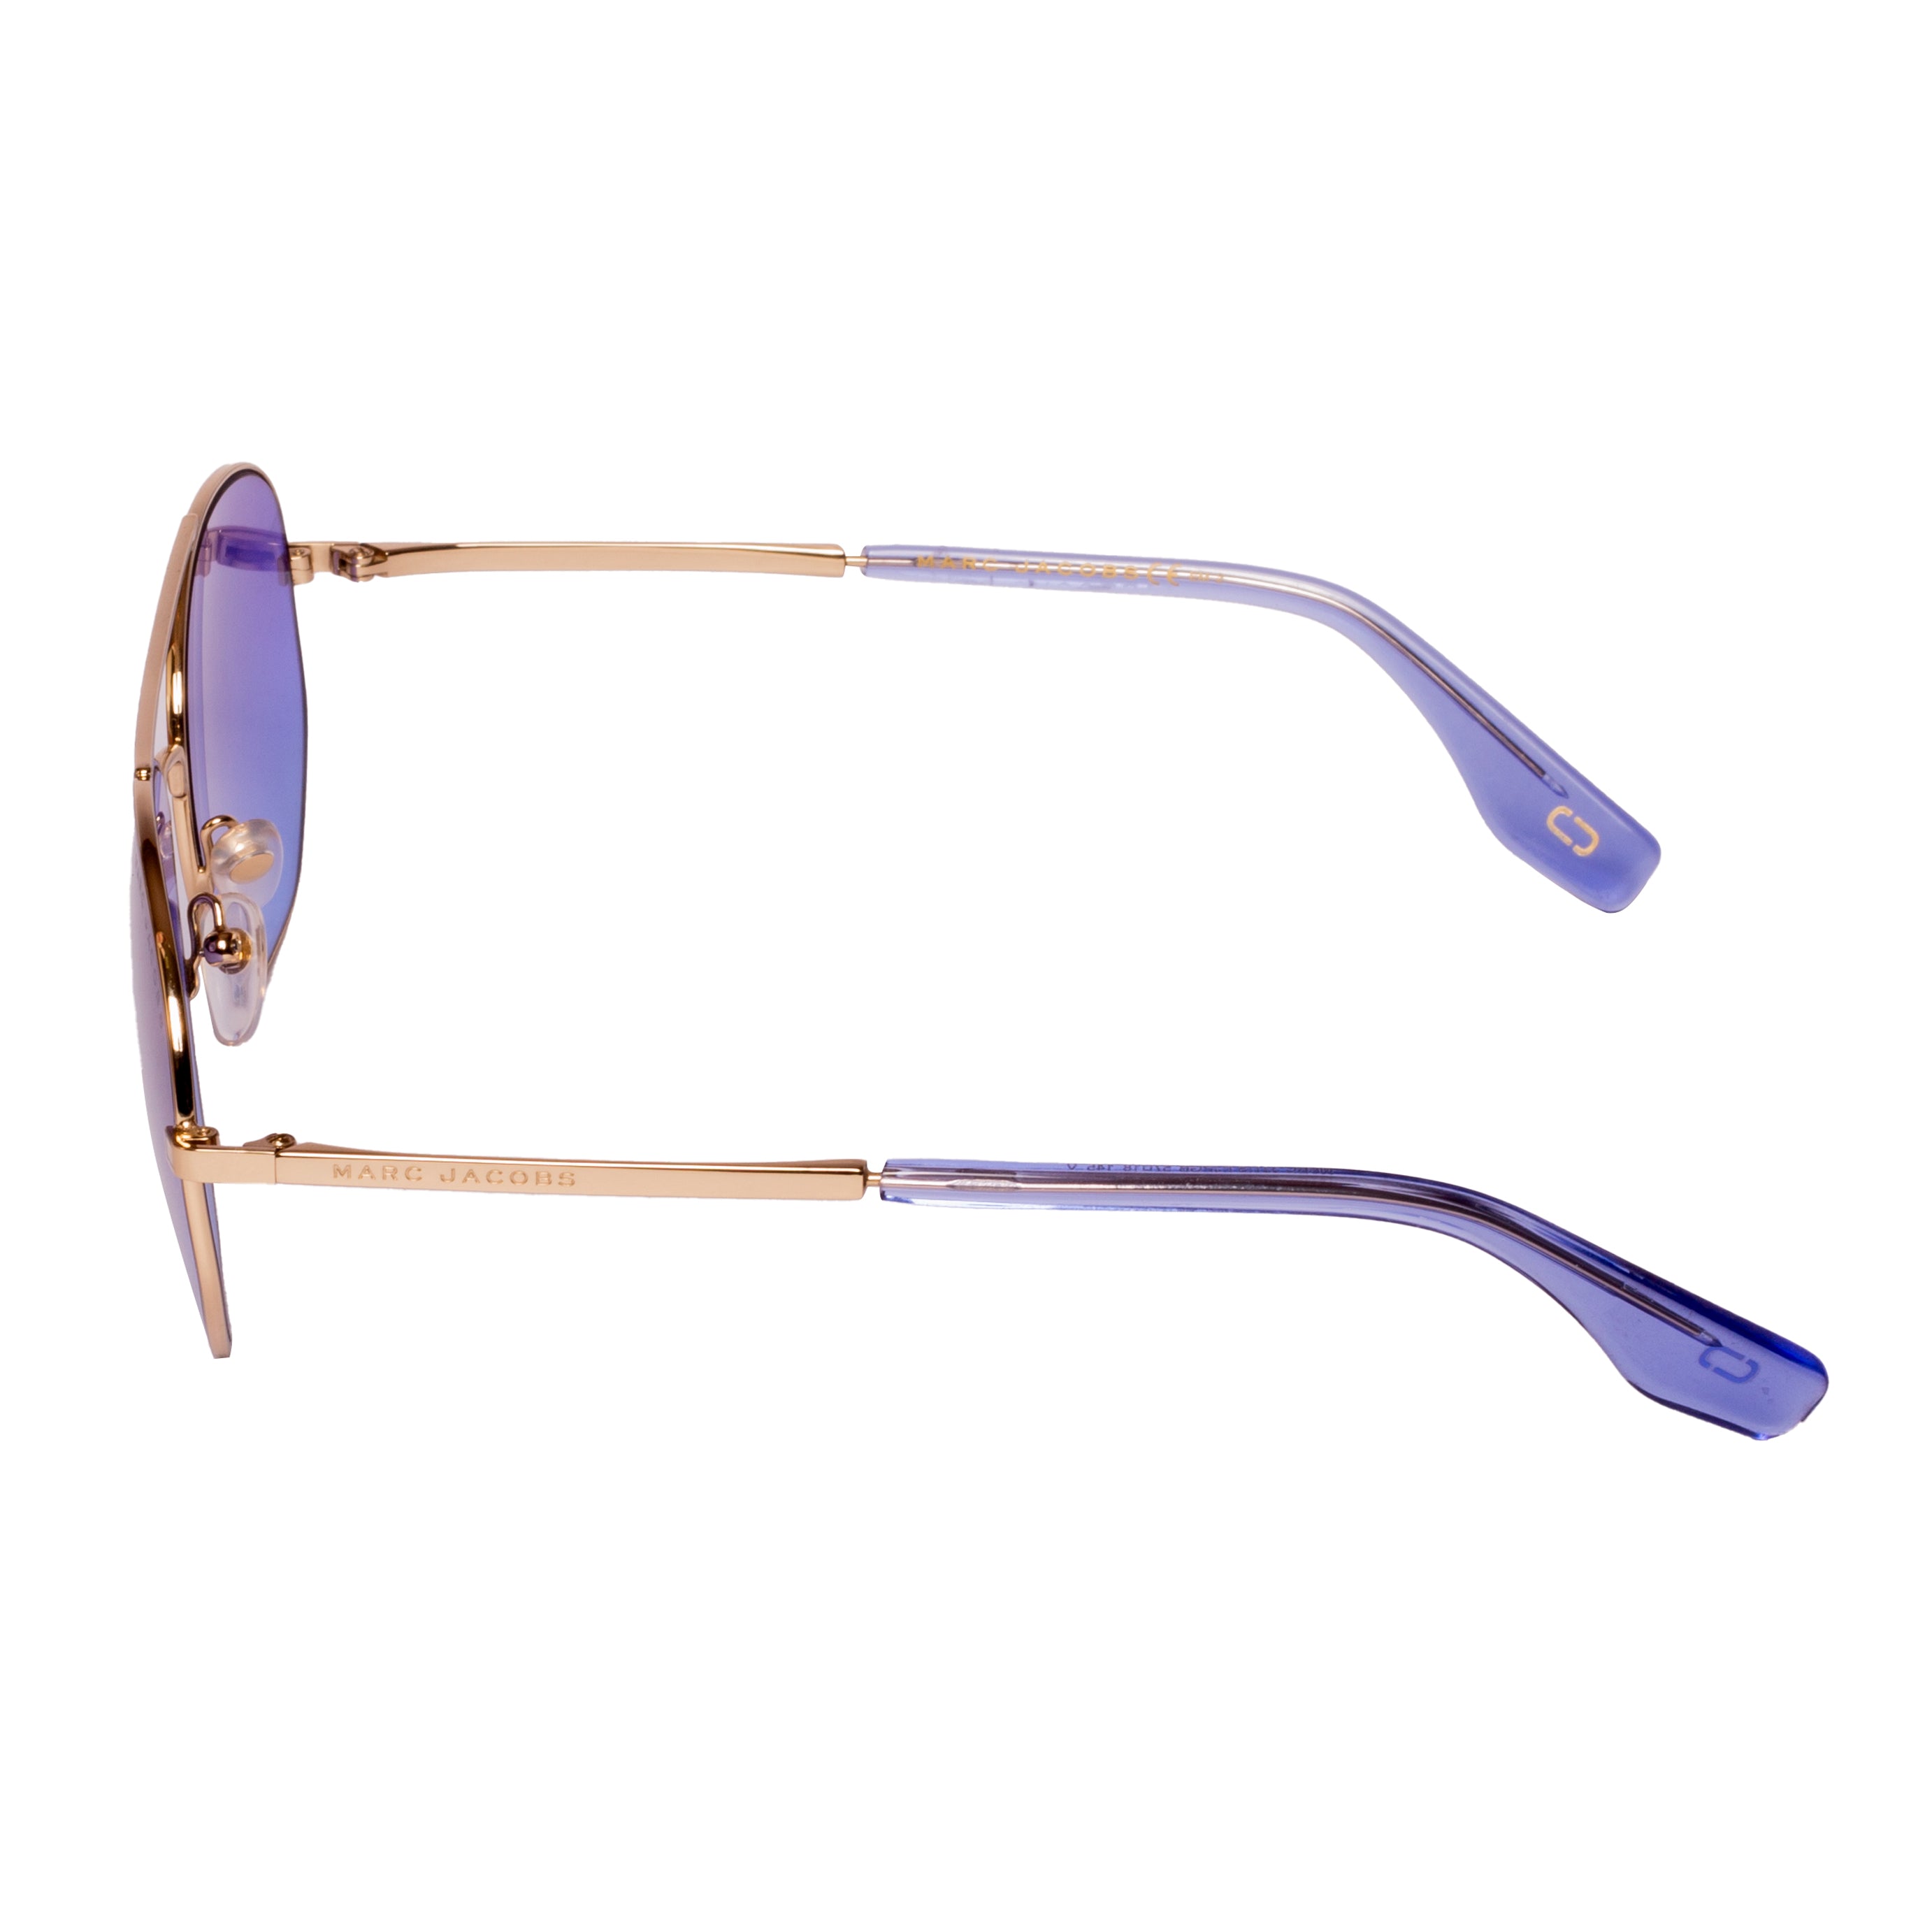 Marc Jacob-327/S-57-PJP GB Sunglasses - Premium Sunglasses from Marc Jacob - Just Rs. 10900! Shop now at Laxmi Opticians